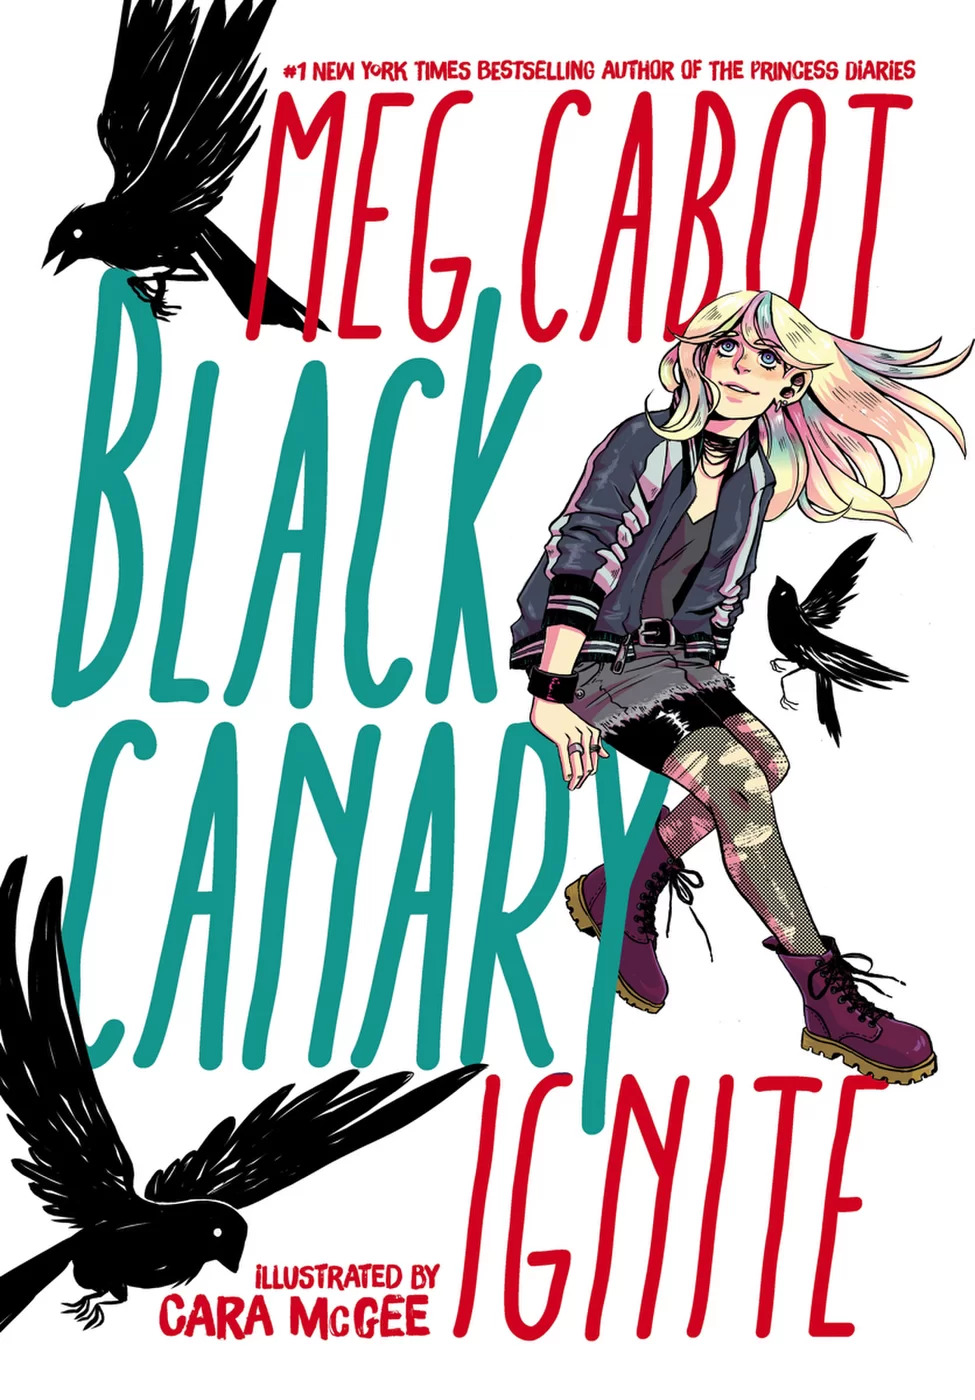 Black Canary: Ignite